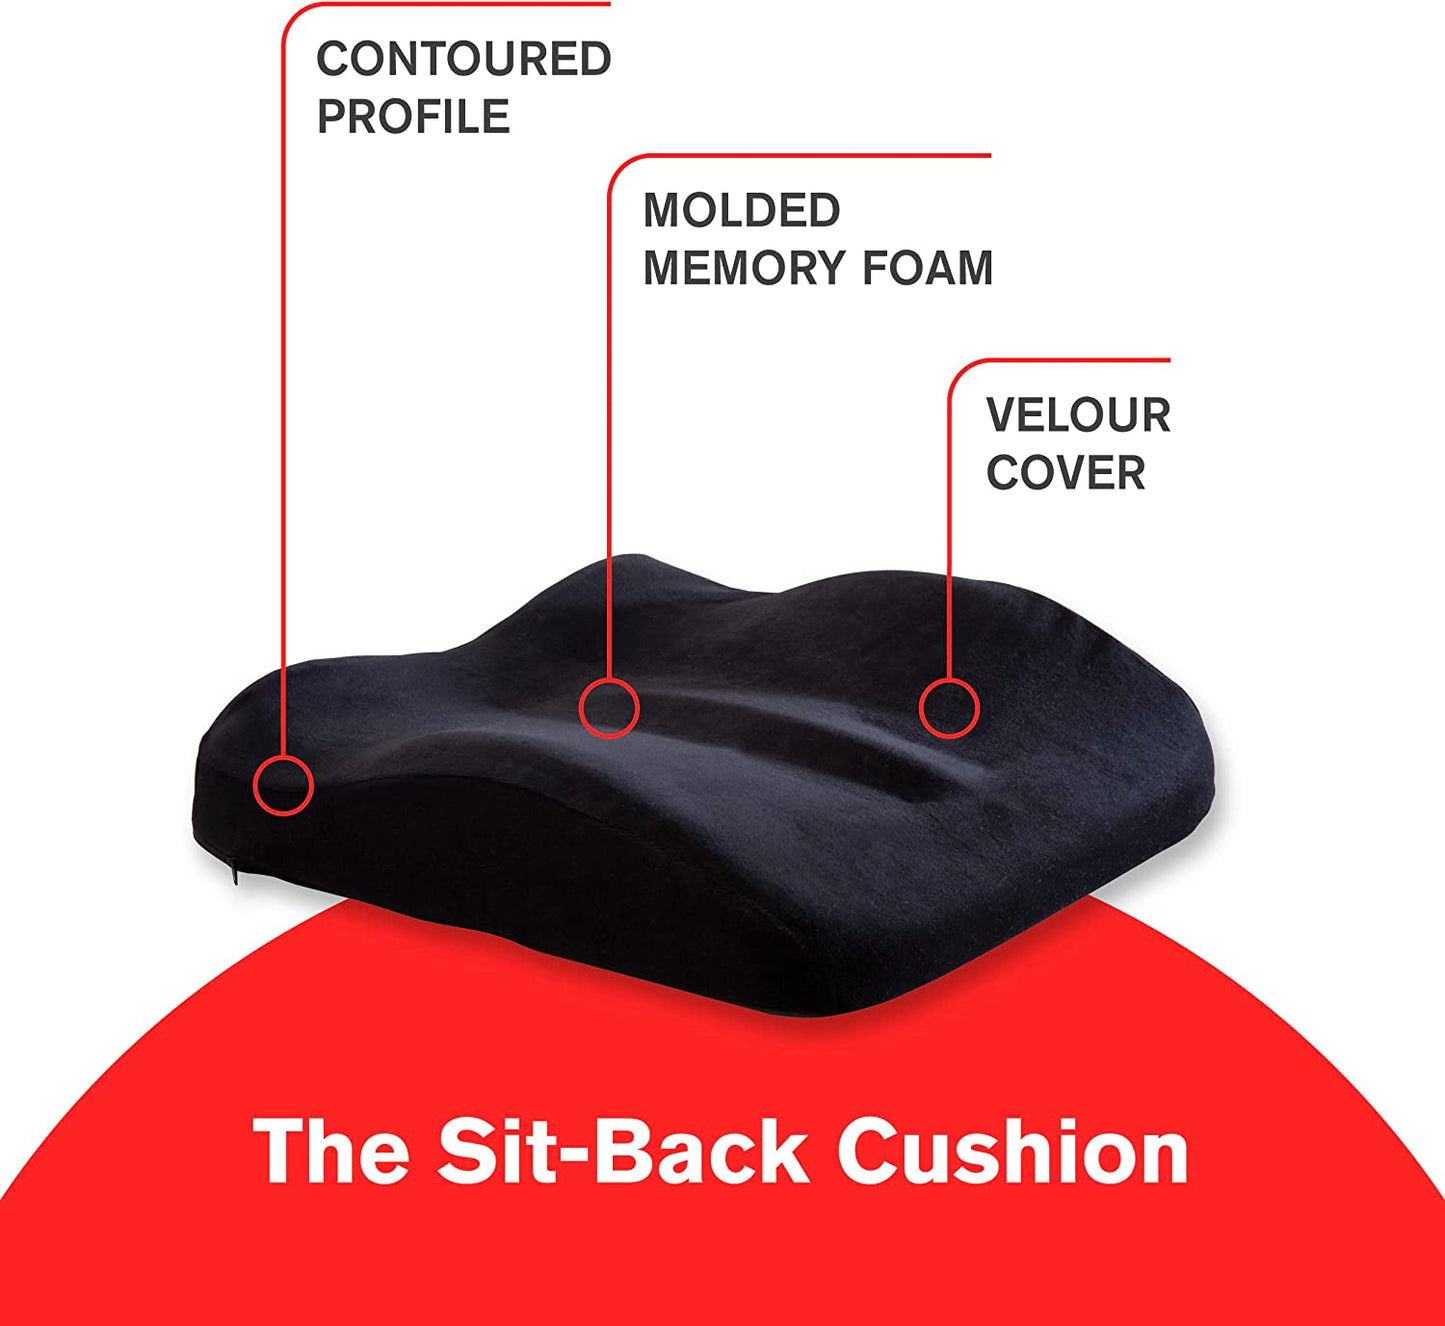 ObusForme Sit-Back Cushion